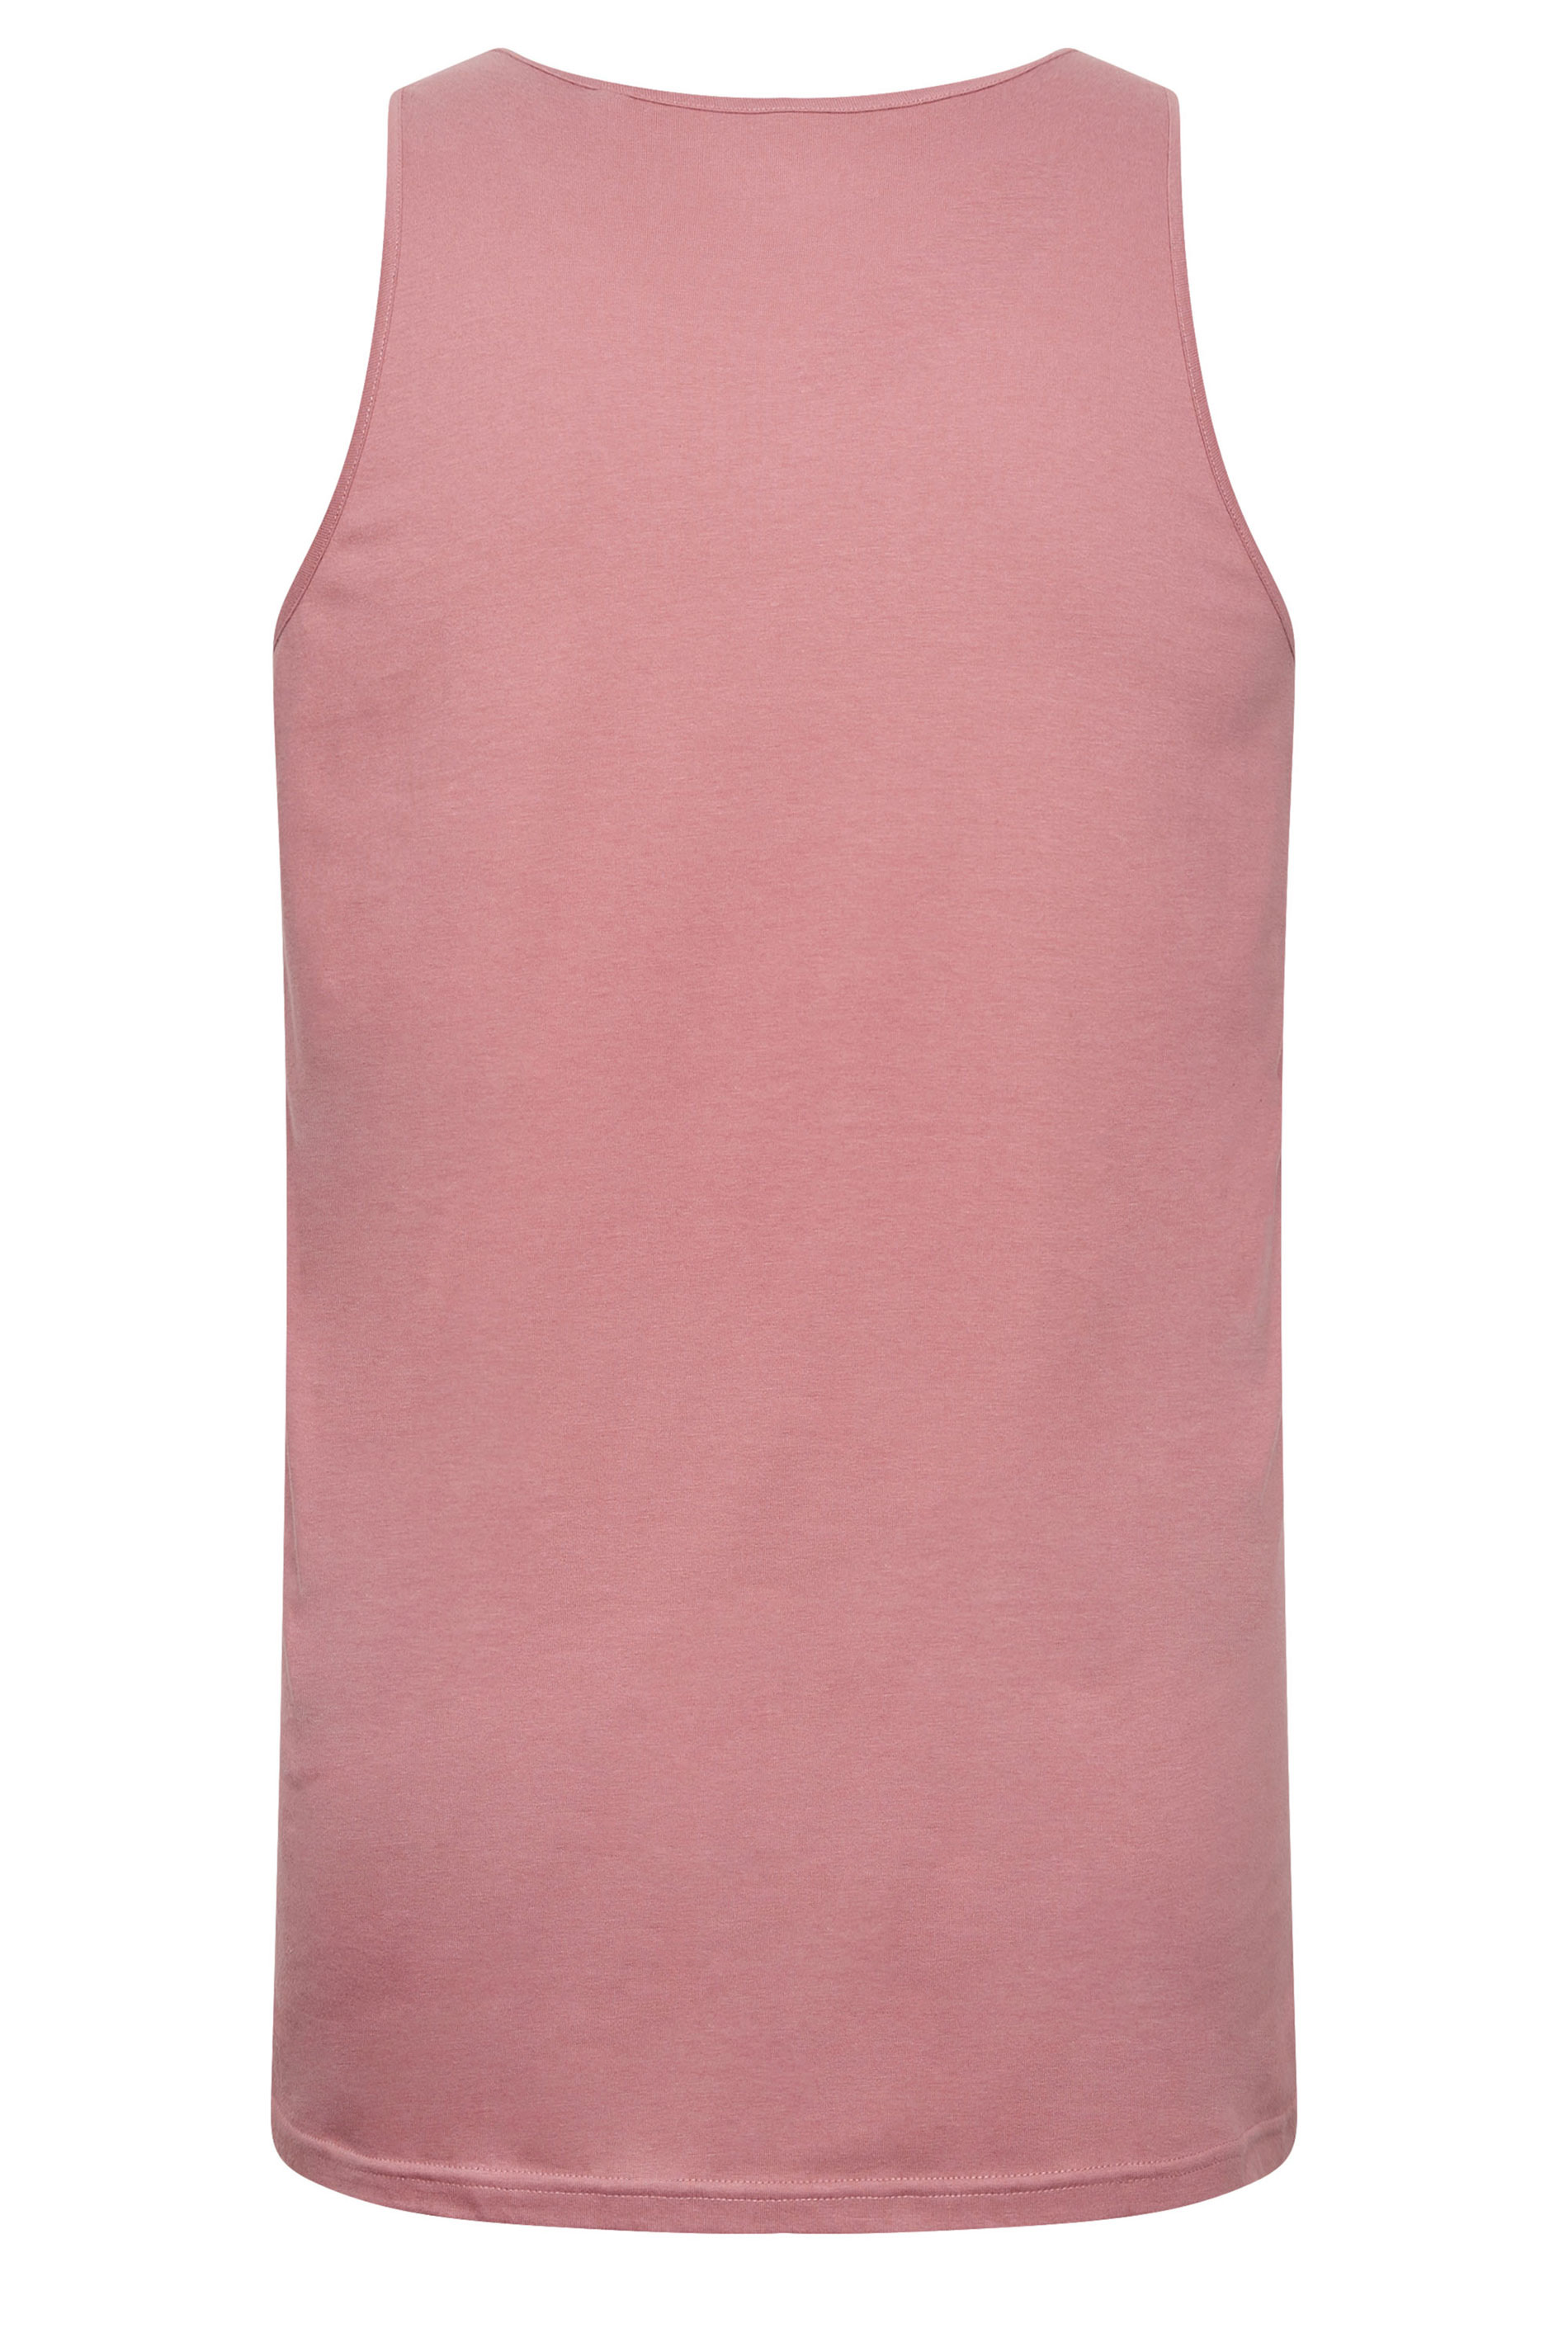 BadRhino Big & Tall Dusty Pink Vest | BadRhino 3